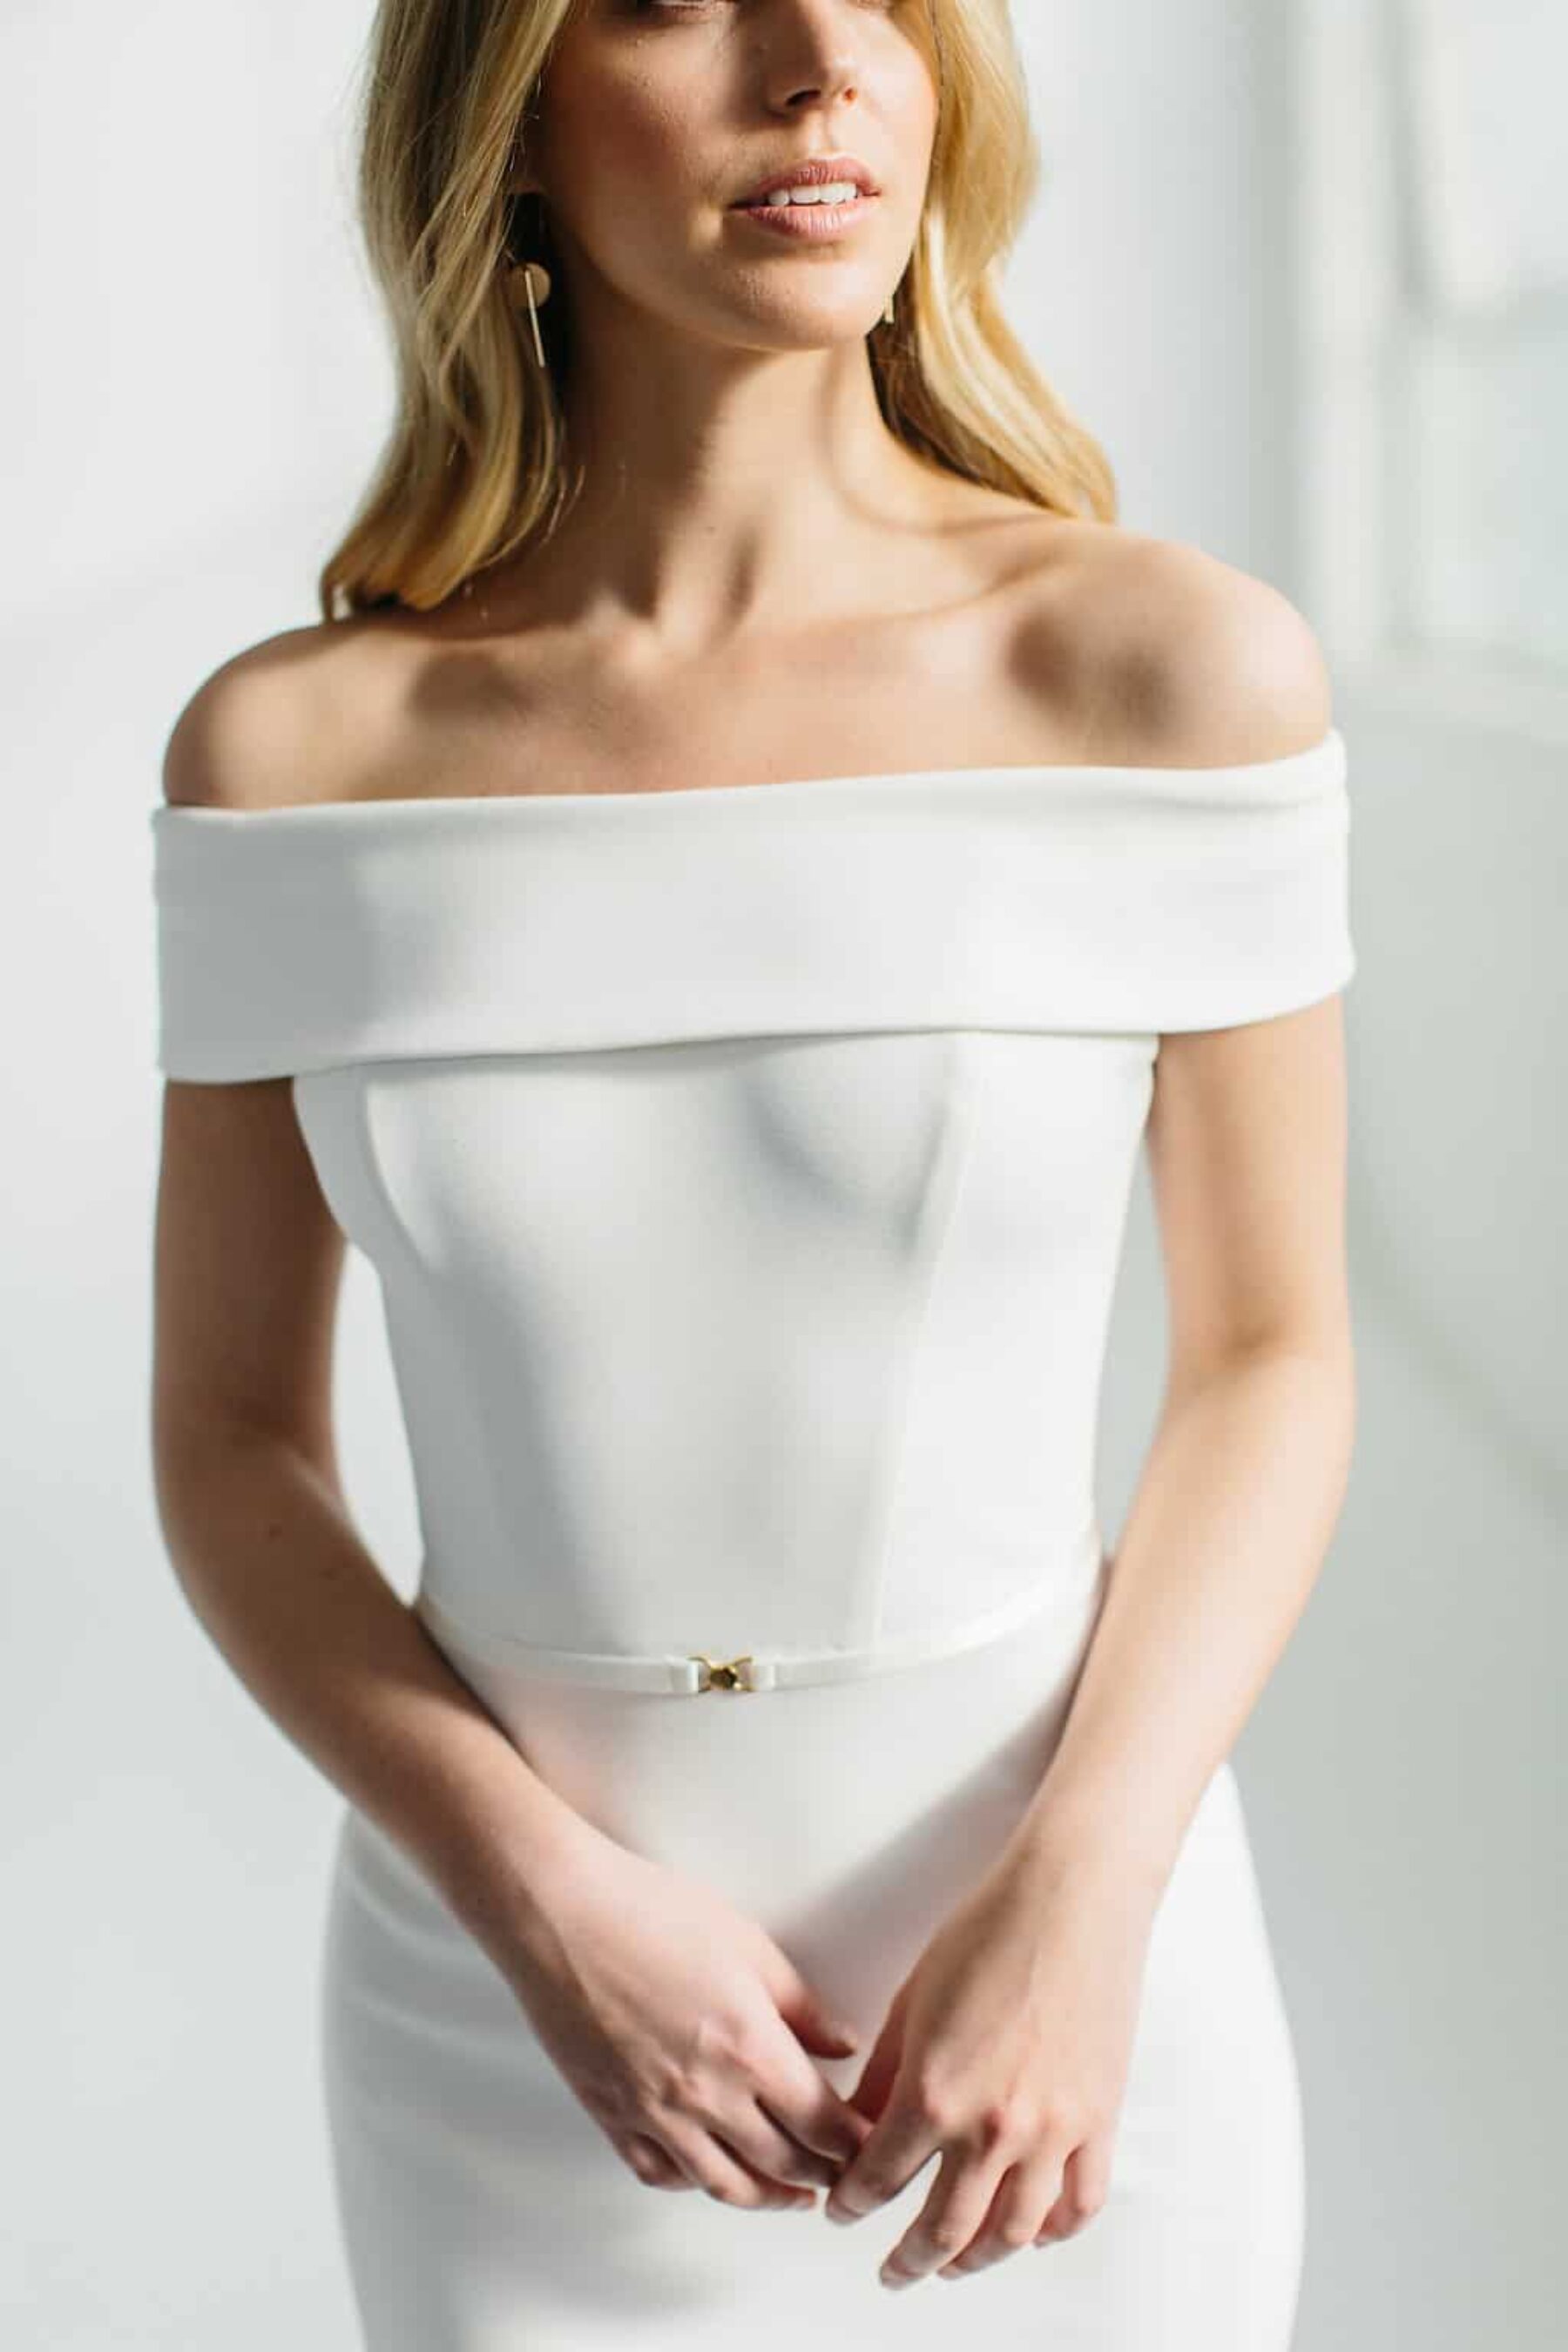 modern, minimal off-shoulder wedding dress